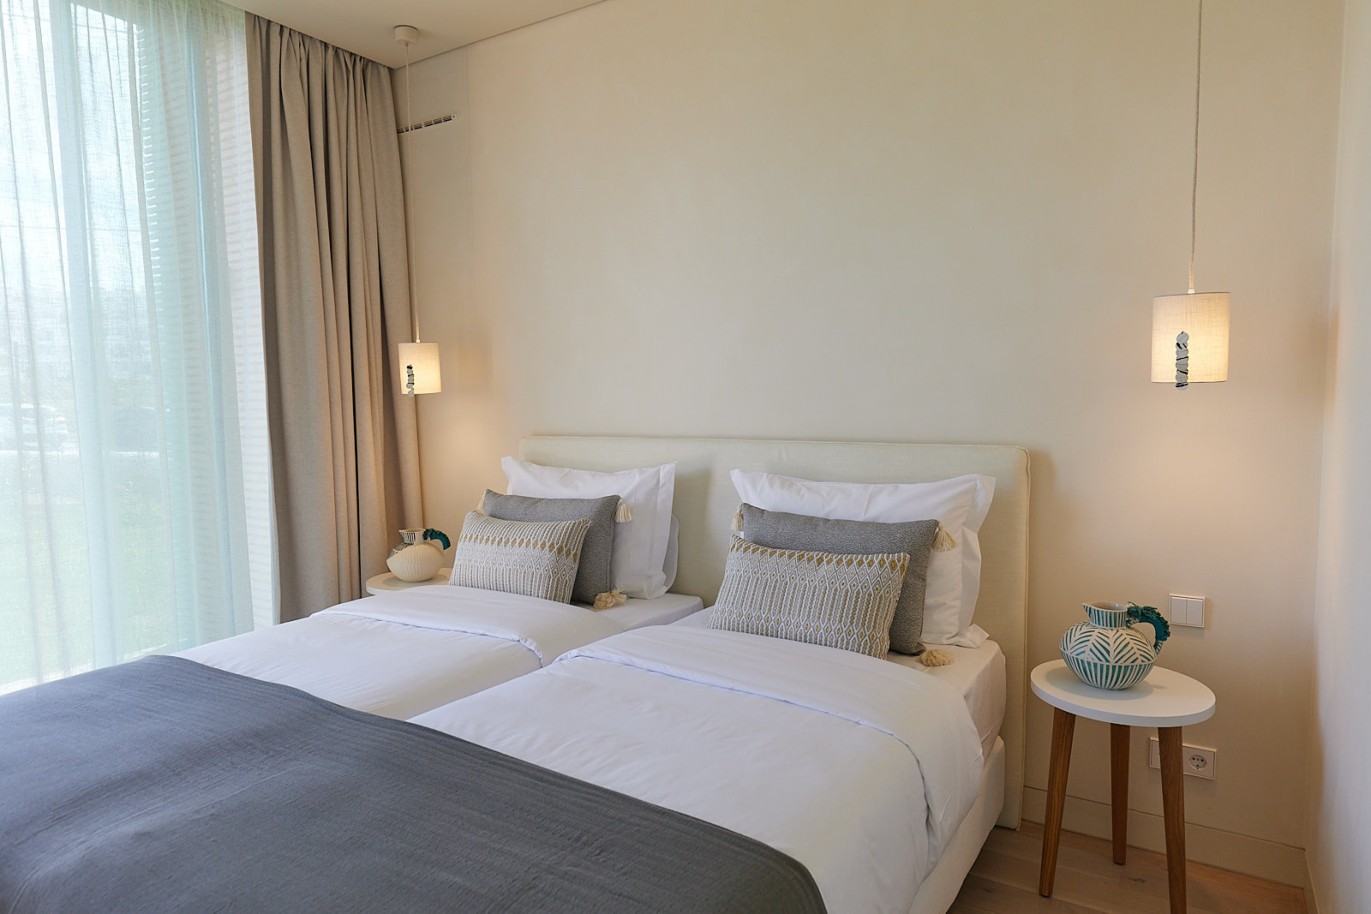 2 bedroom apartment in resort, for sale in Porches, Algarve_229115